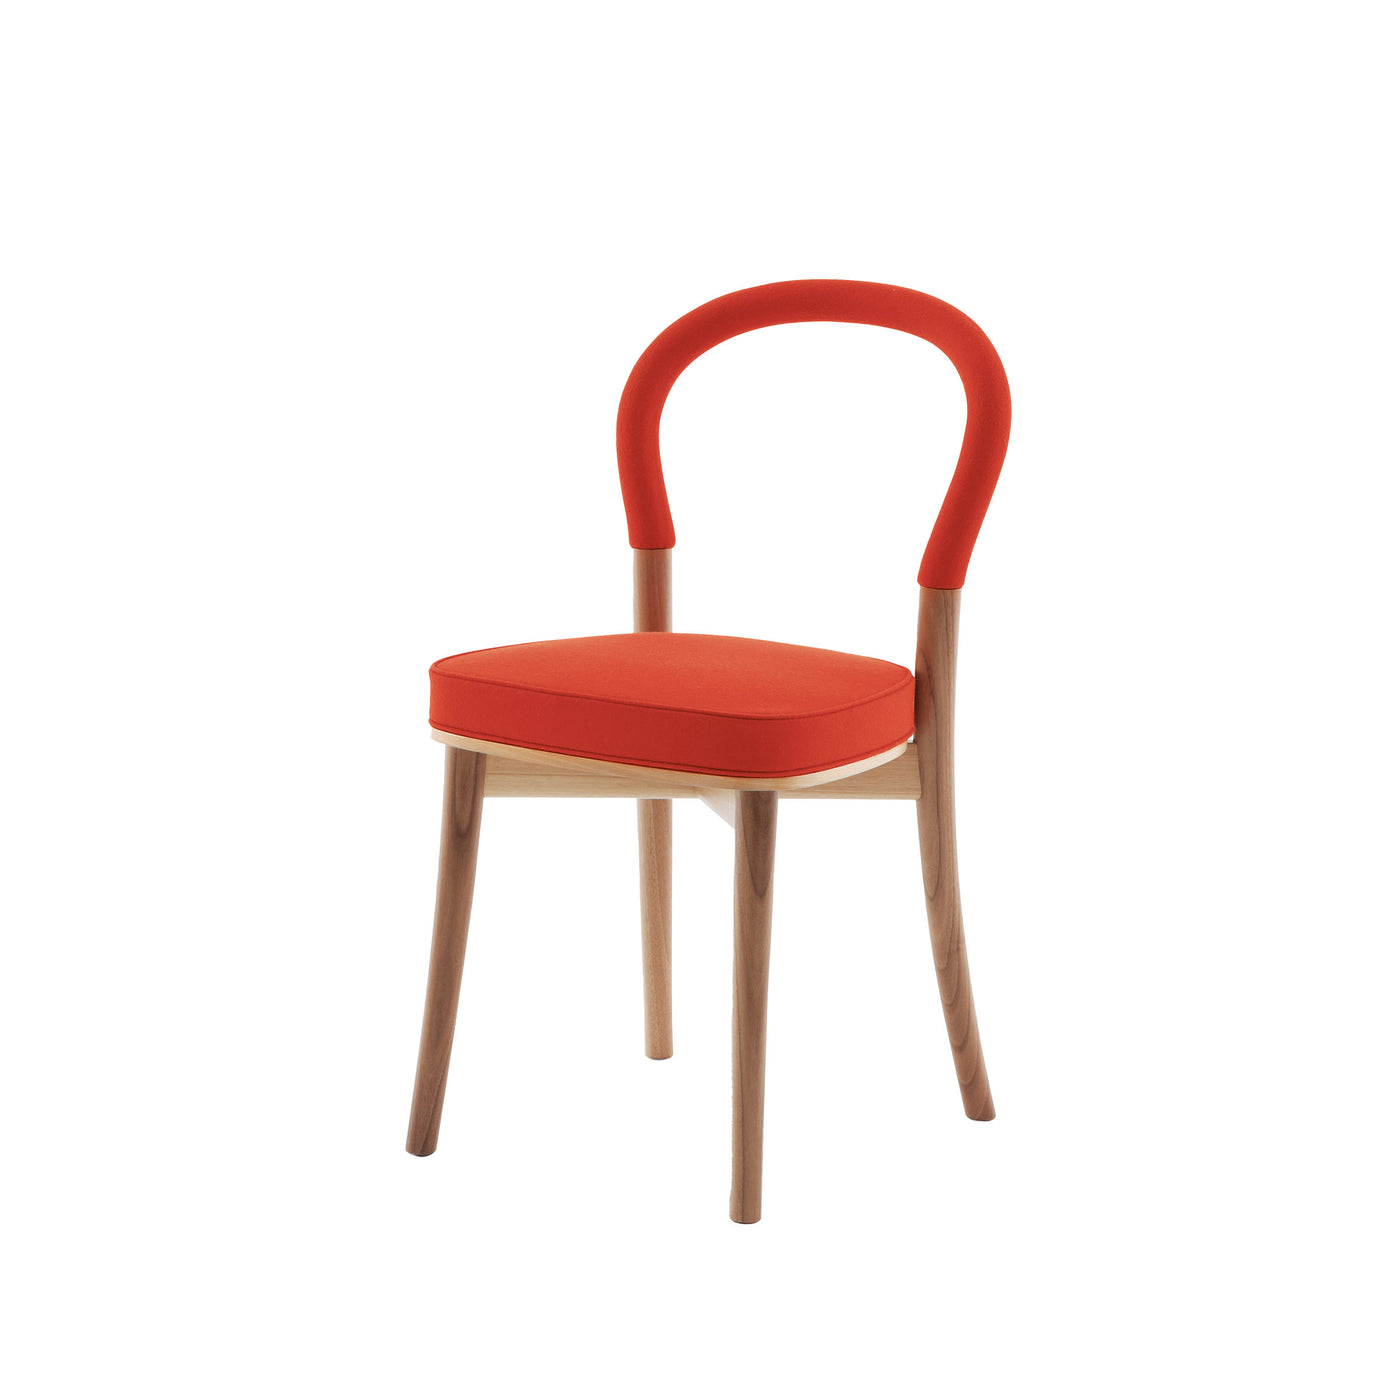 Wood and Fabric Chair GOTEBORG 1 by Erik Gunnar Asplund for Cassina 01